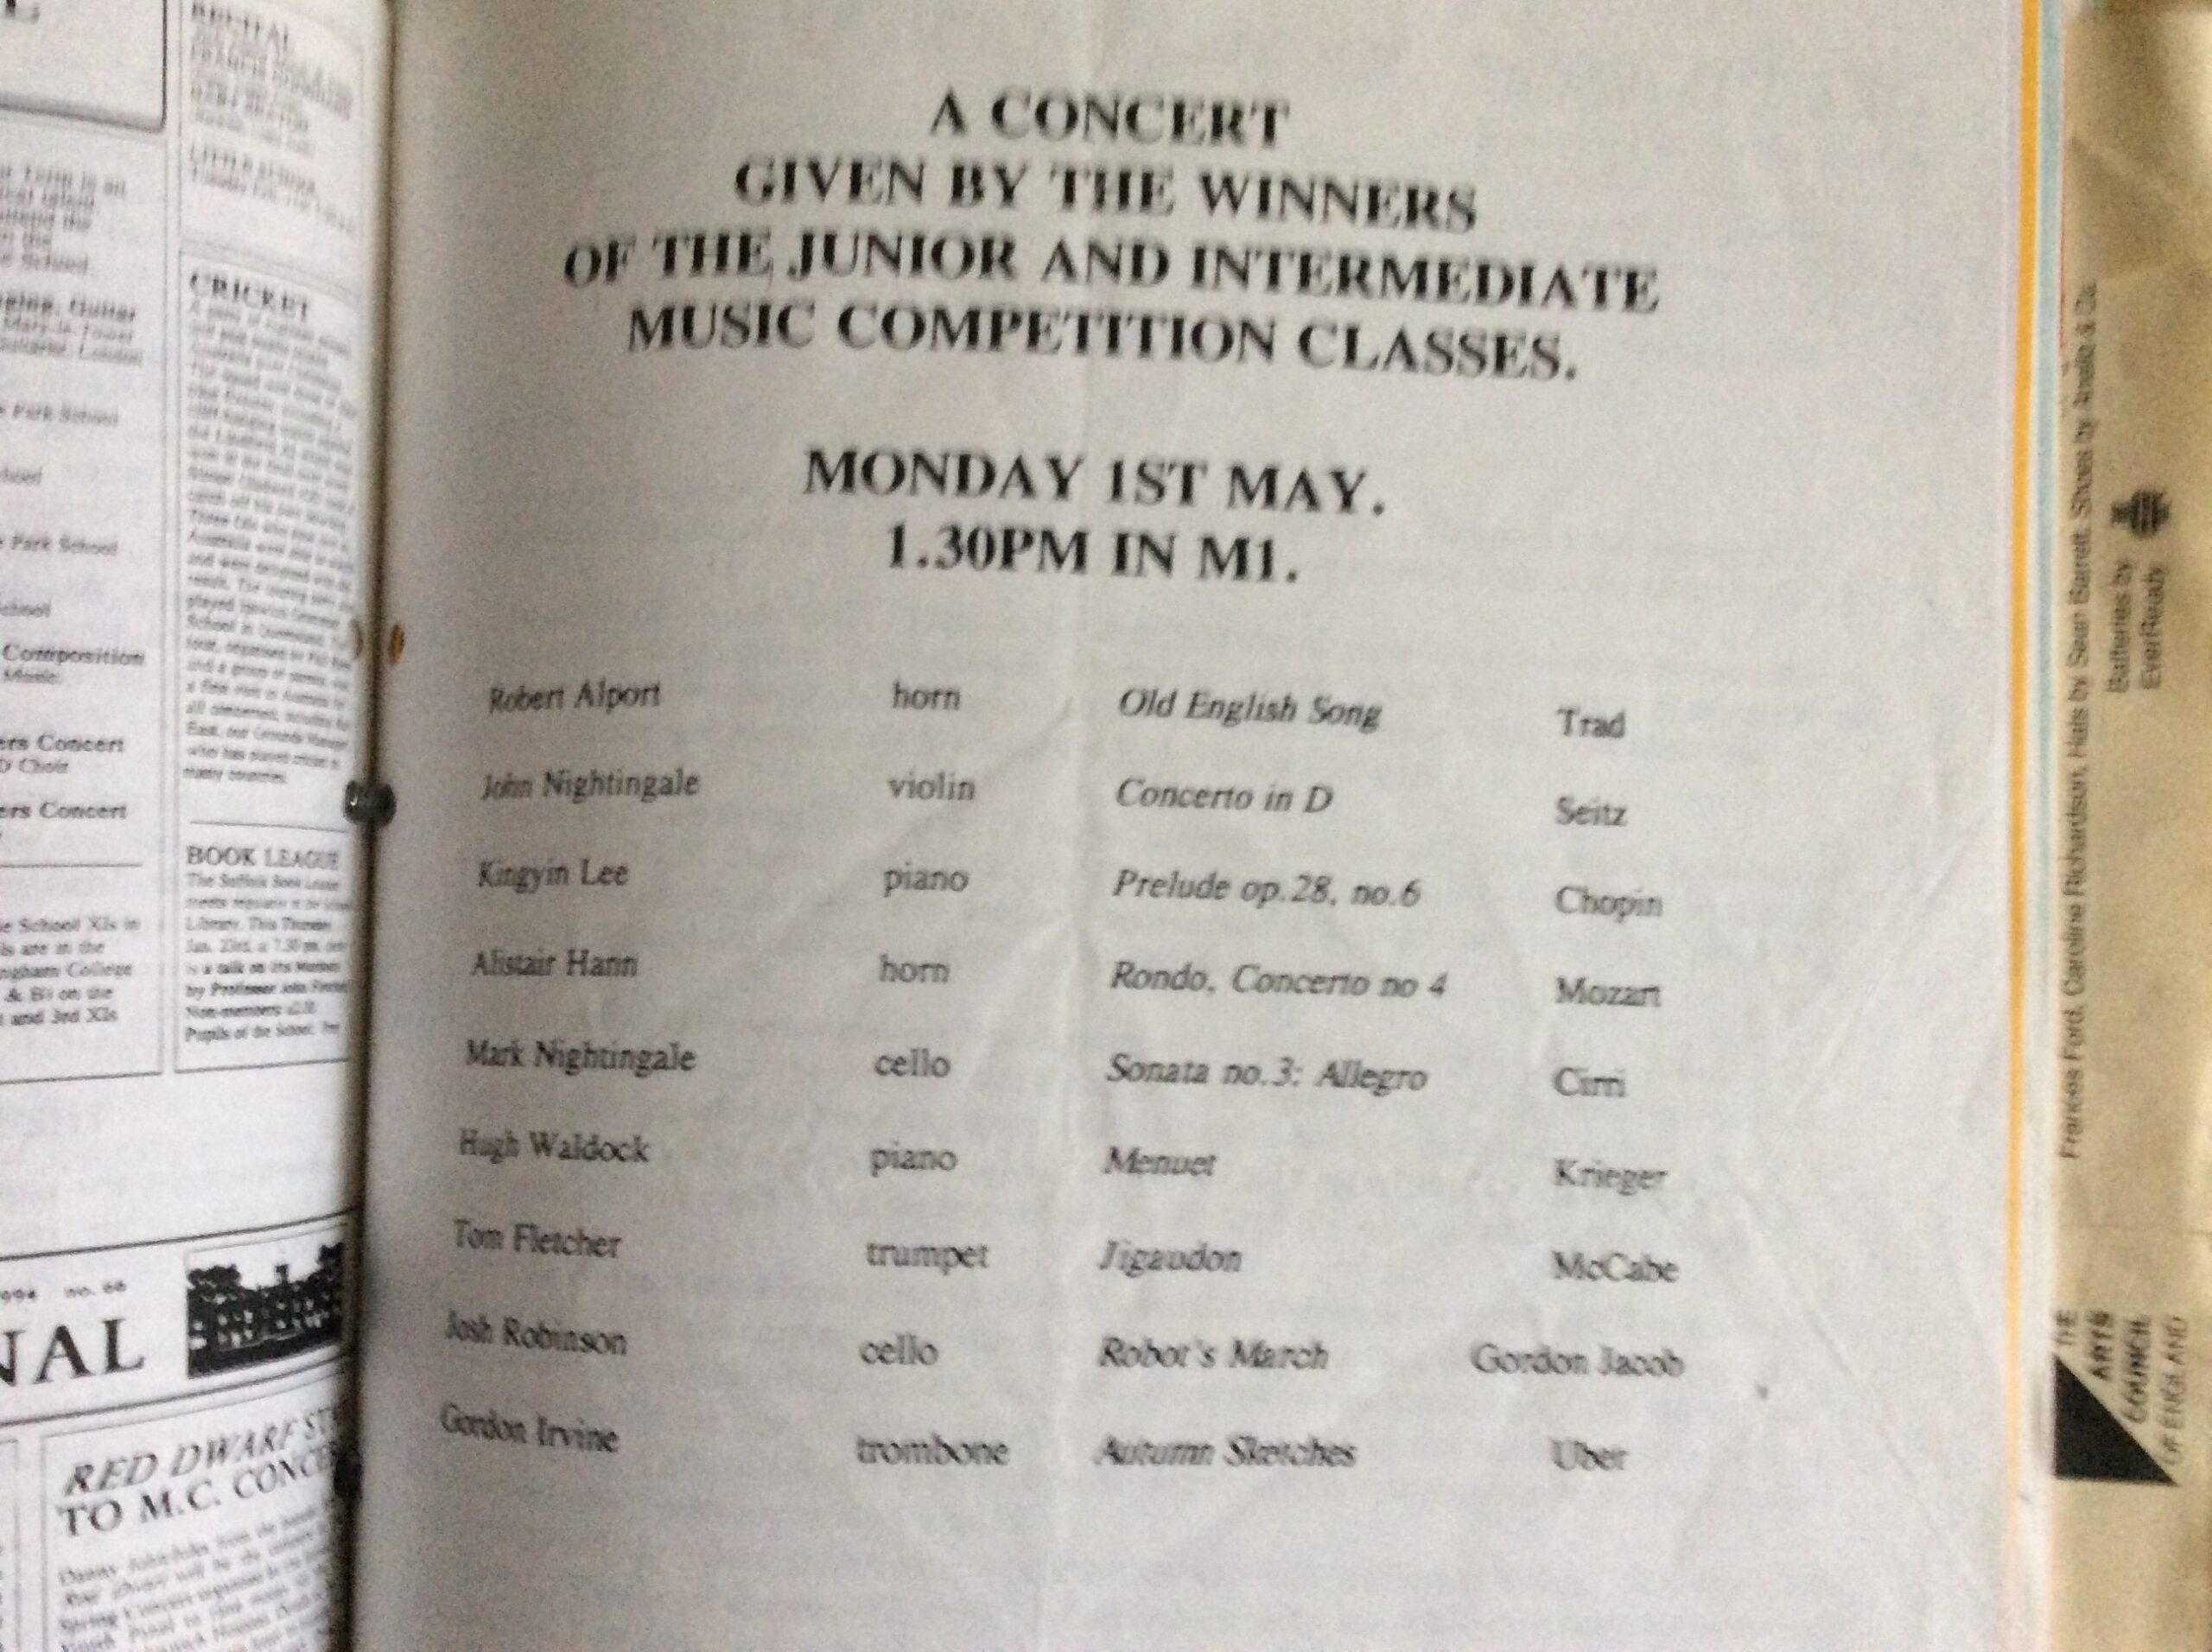 Winner's Concert Programme 1995